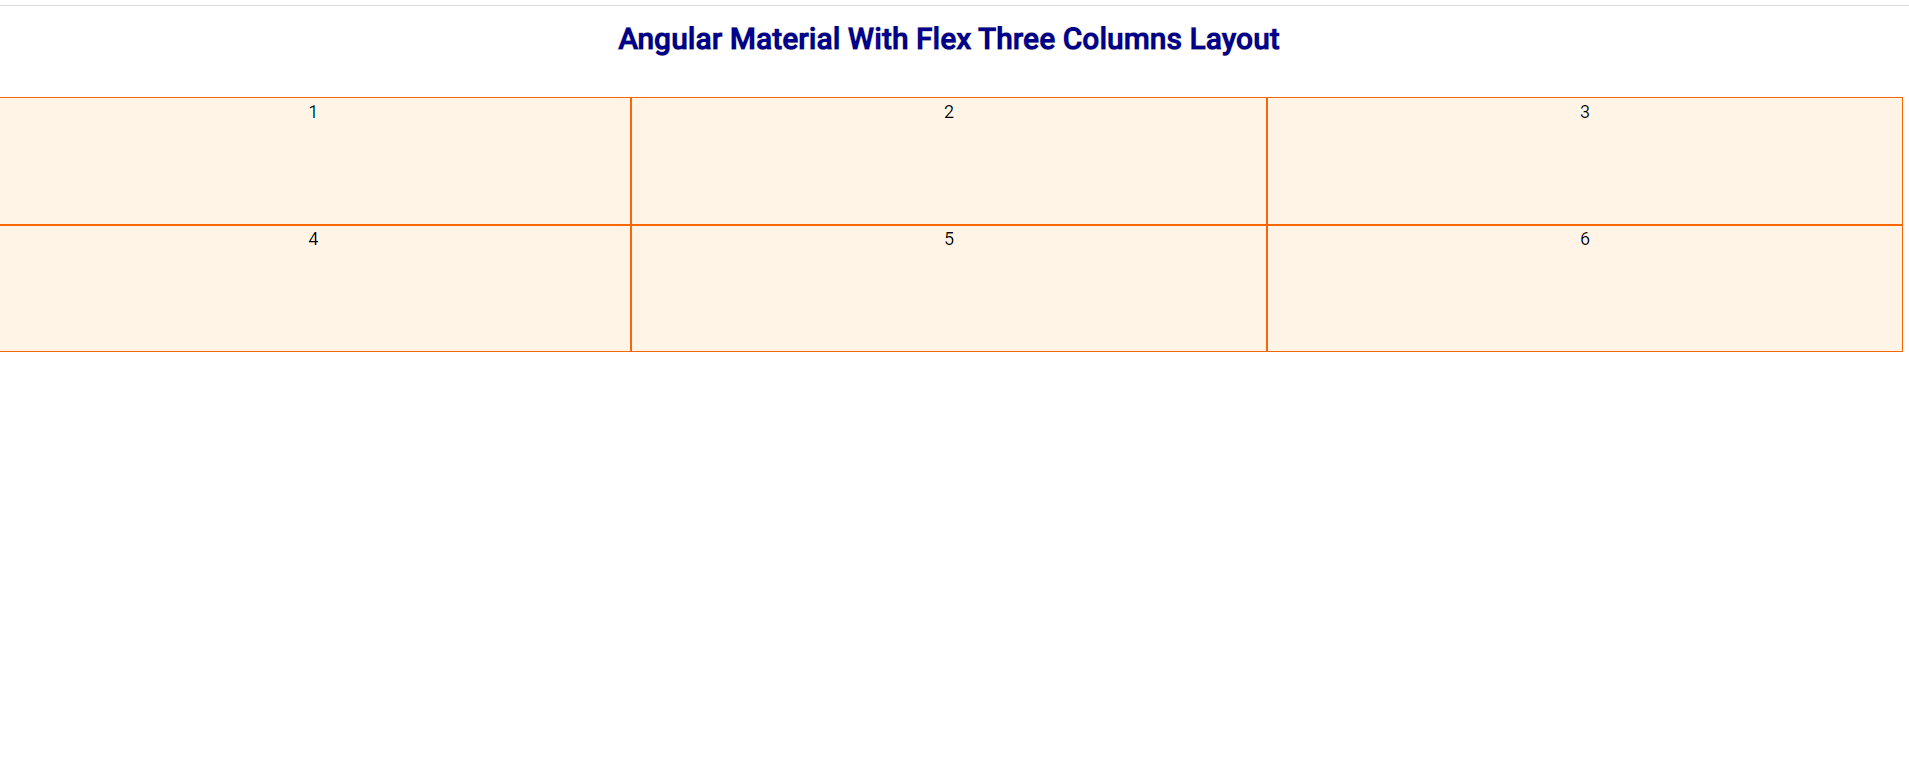 Esencialmente esponja asignación Angular Material With Flex Three Columns Layout - Therichpost